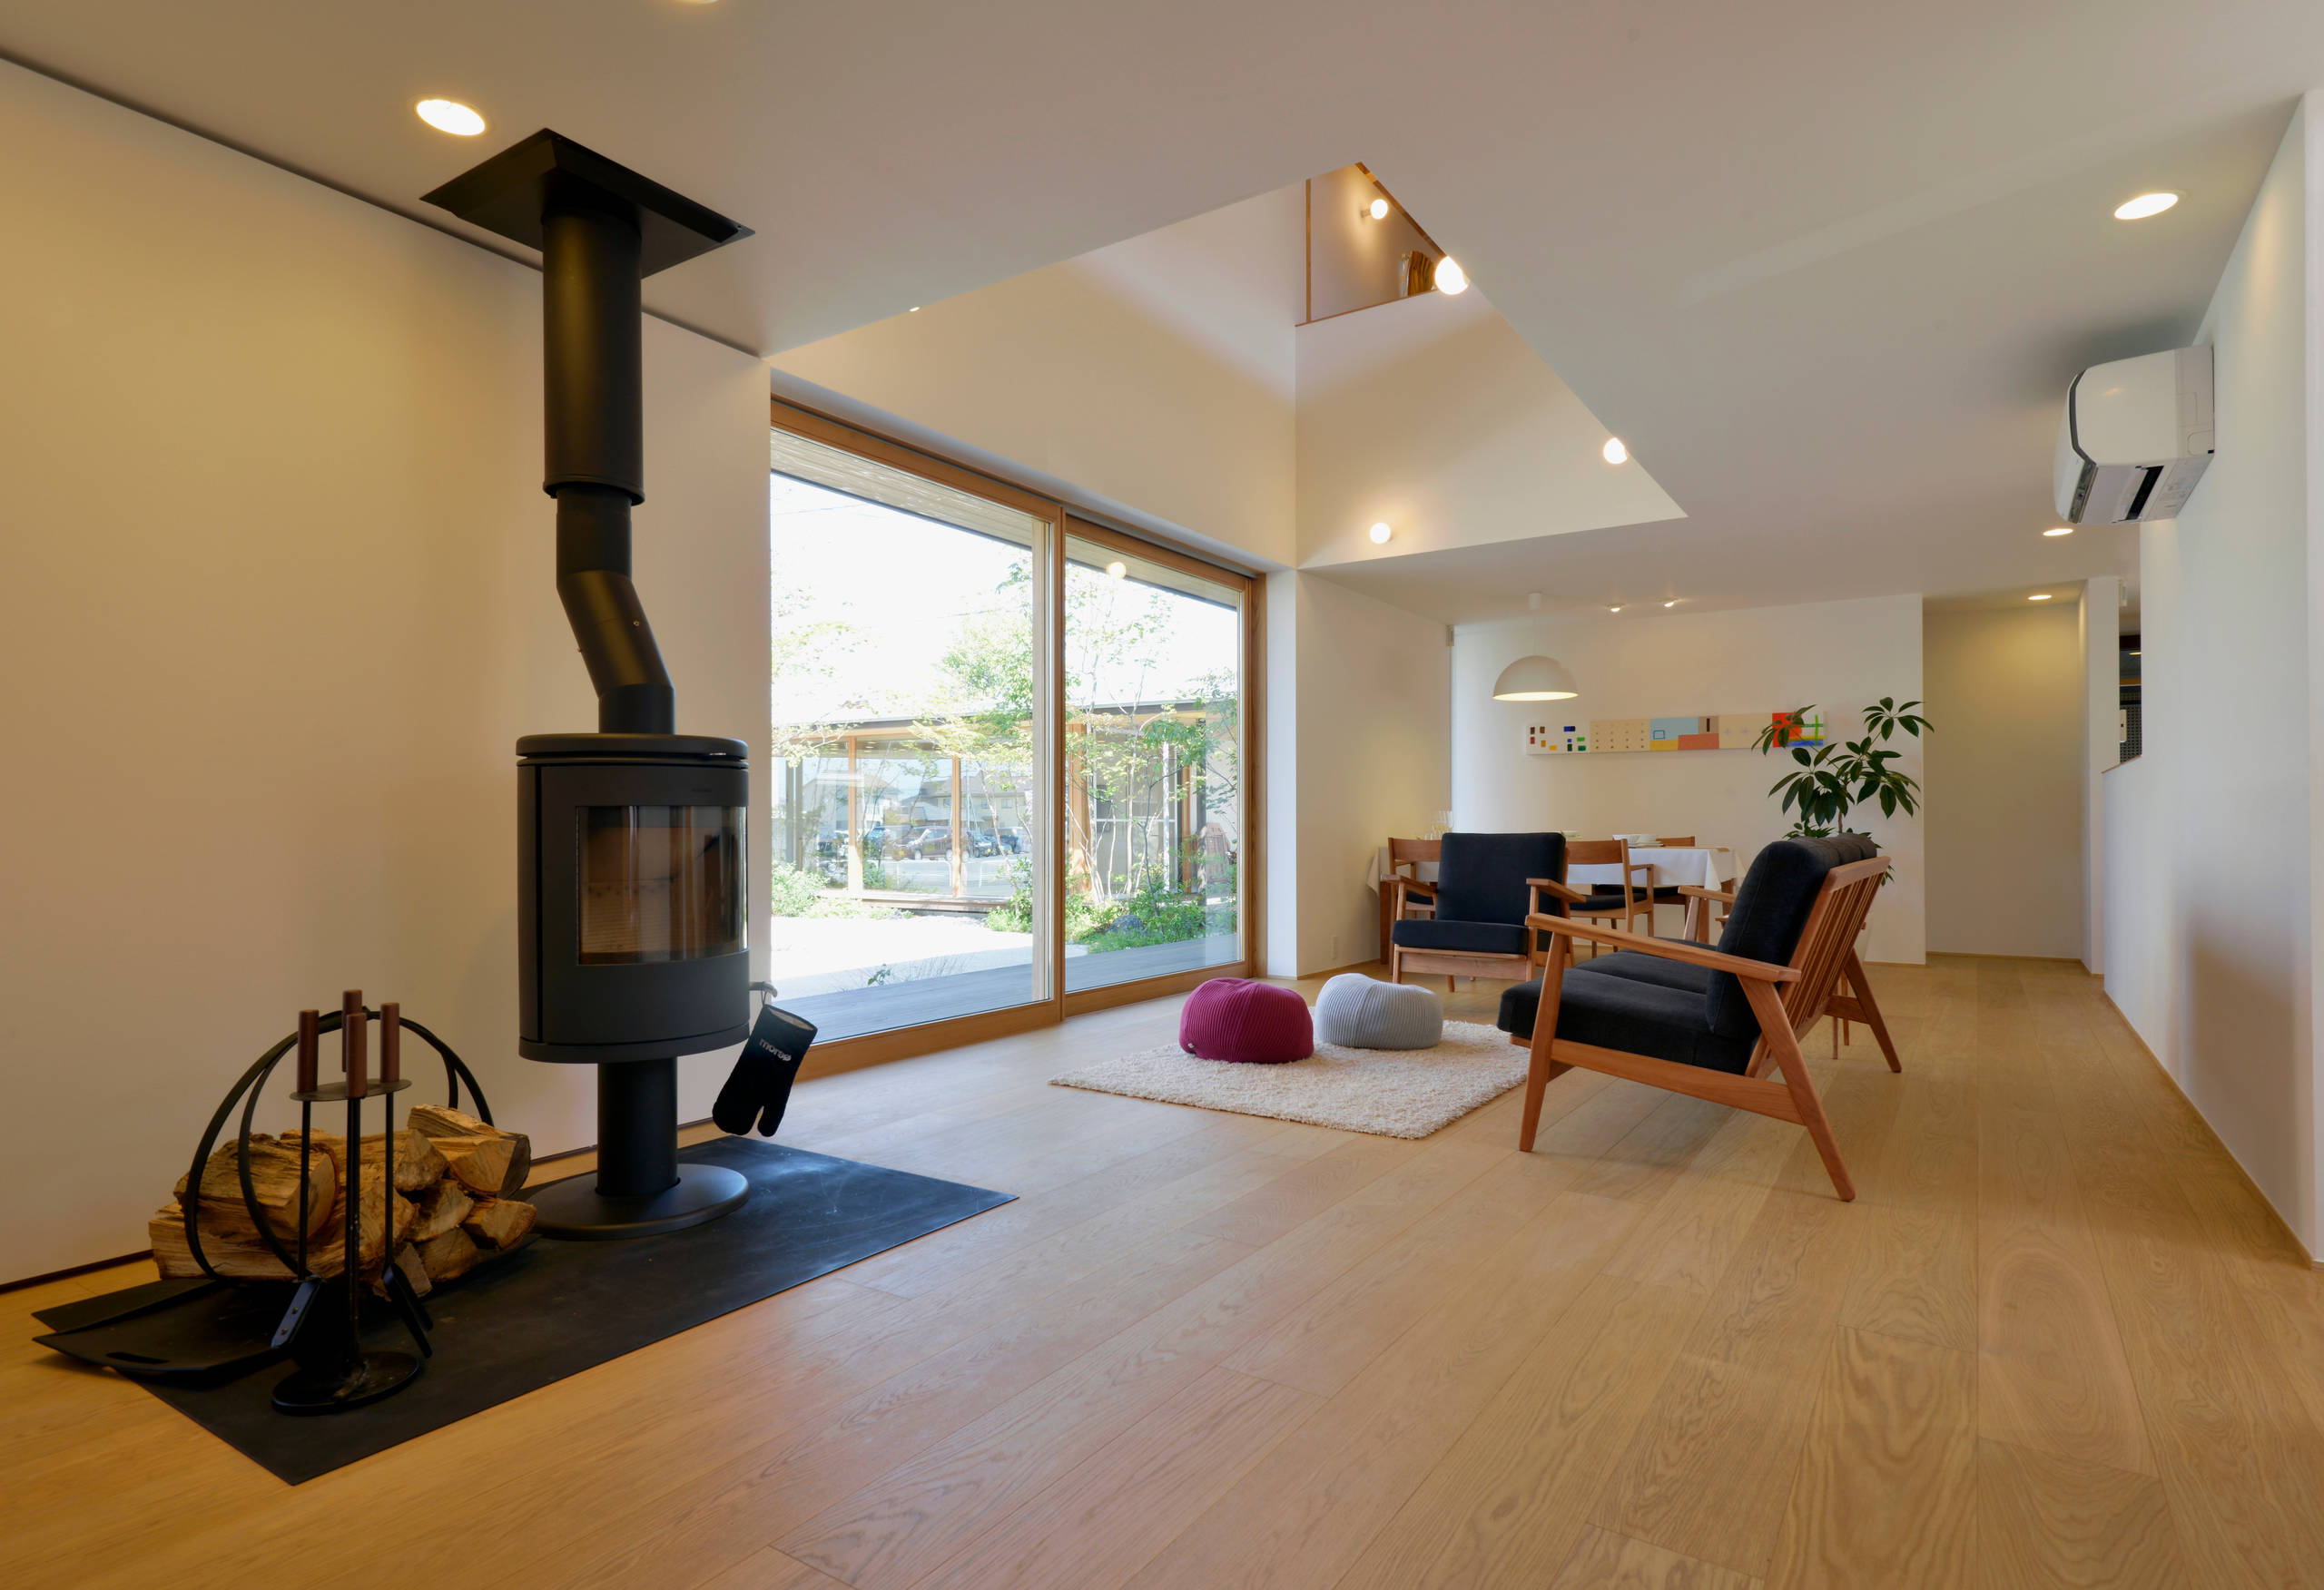 15 Beautiful iModerni Living iRoomi Designs Your Home 